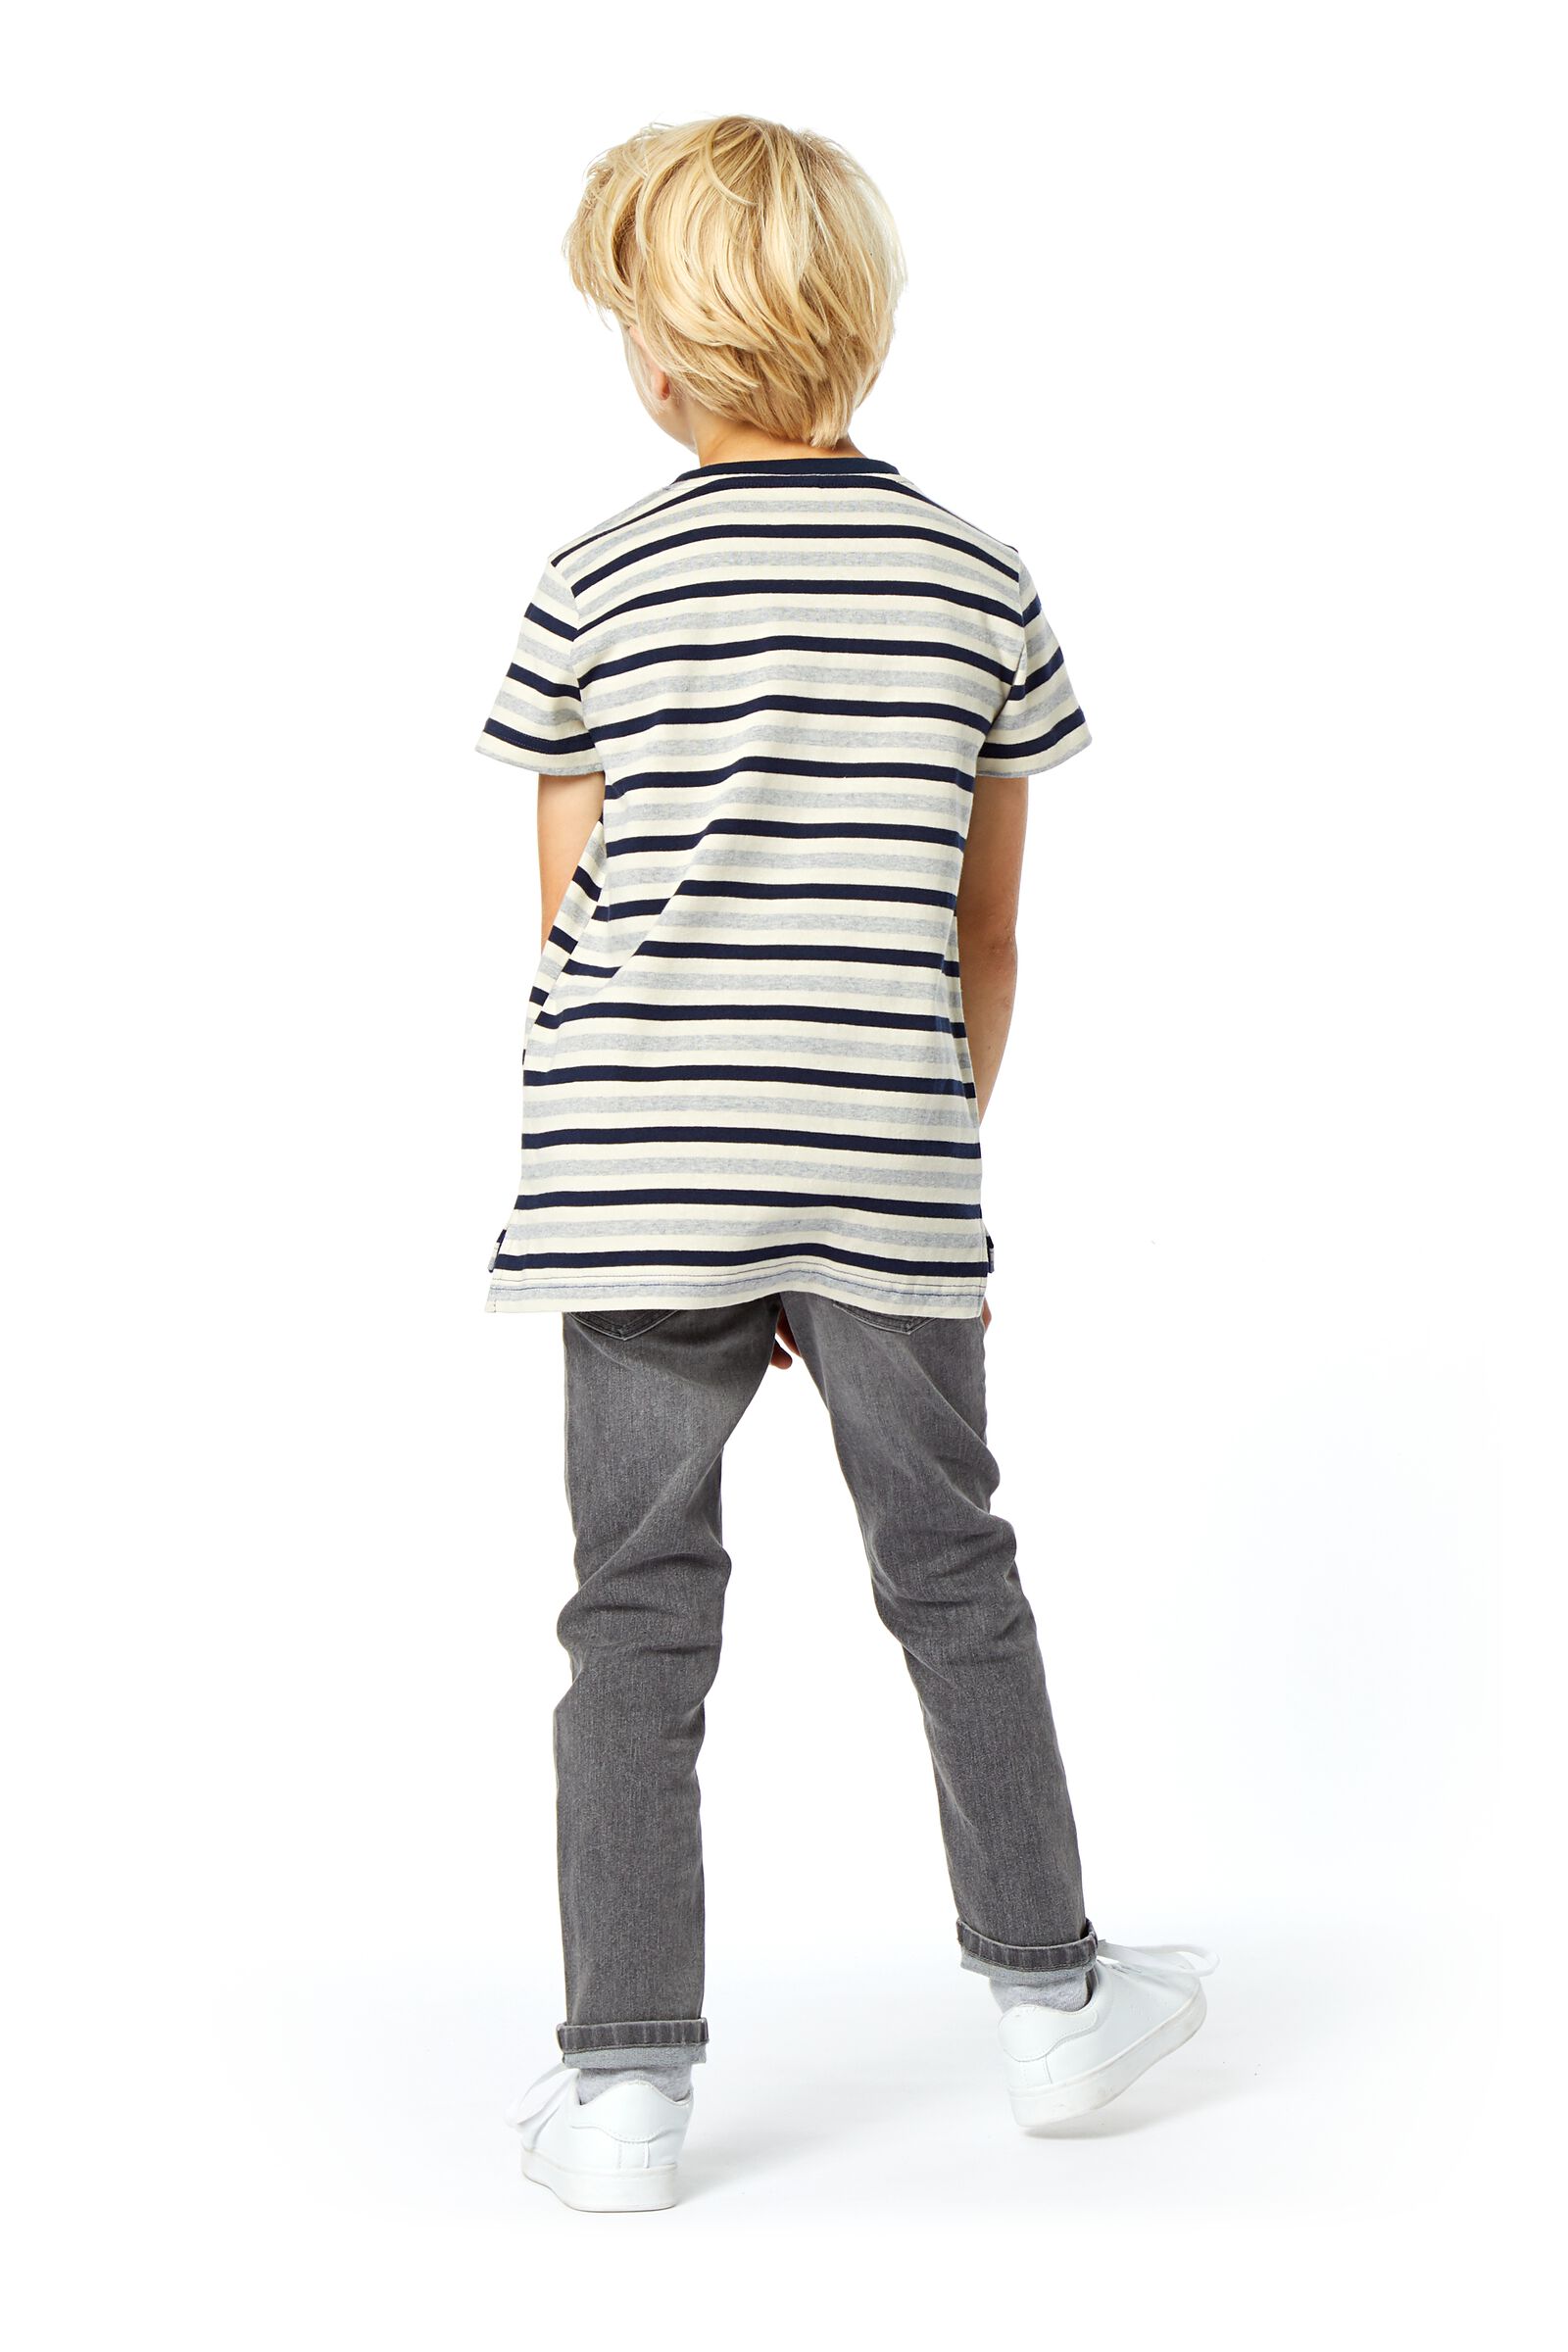 jean enfant - modèle regular gris 128 - 30765849 - HEMA